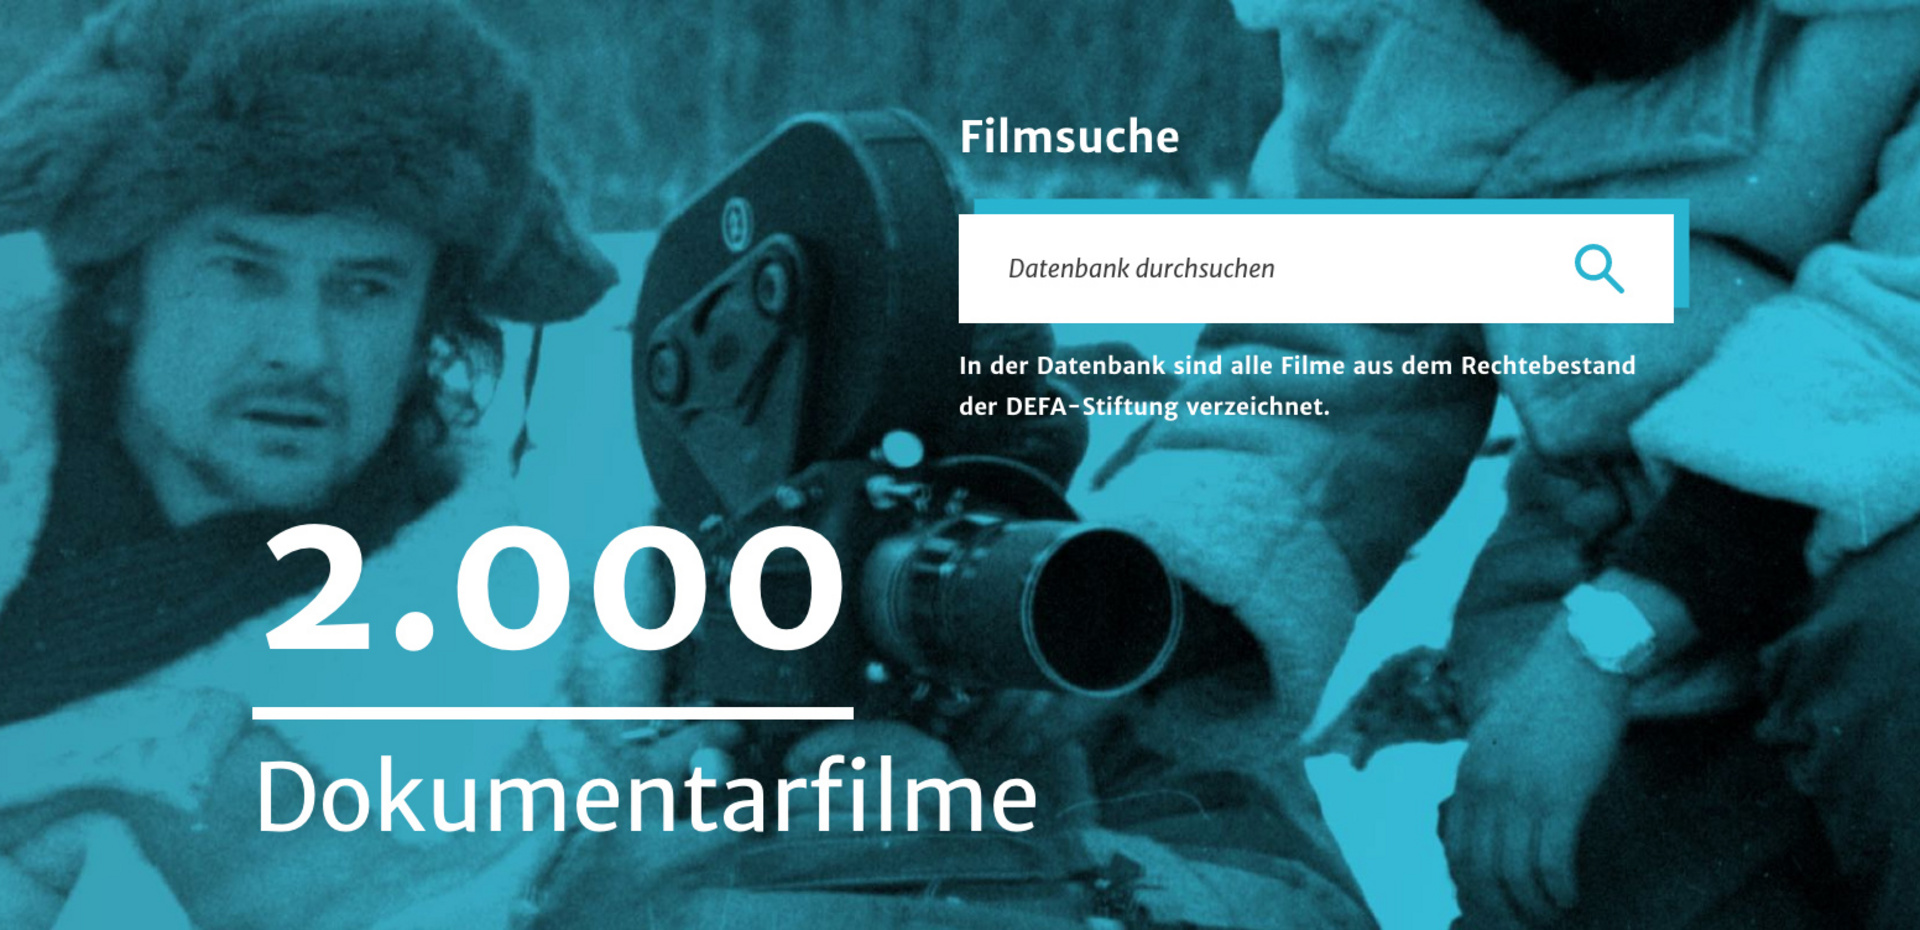 DDR-Kinofilmdatenbank: Datenbank